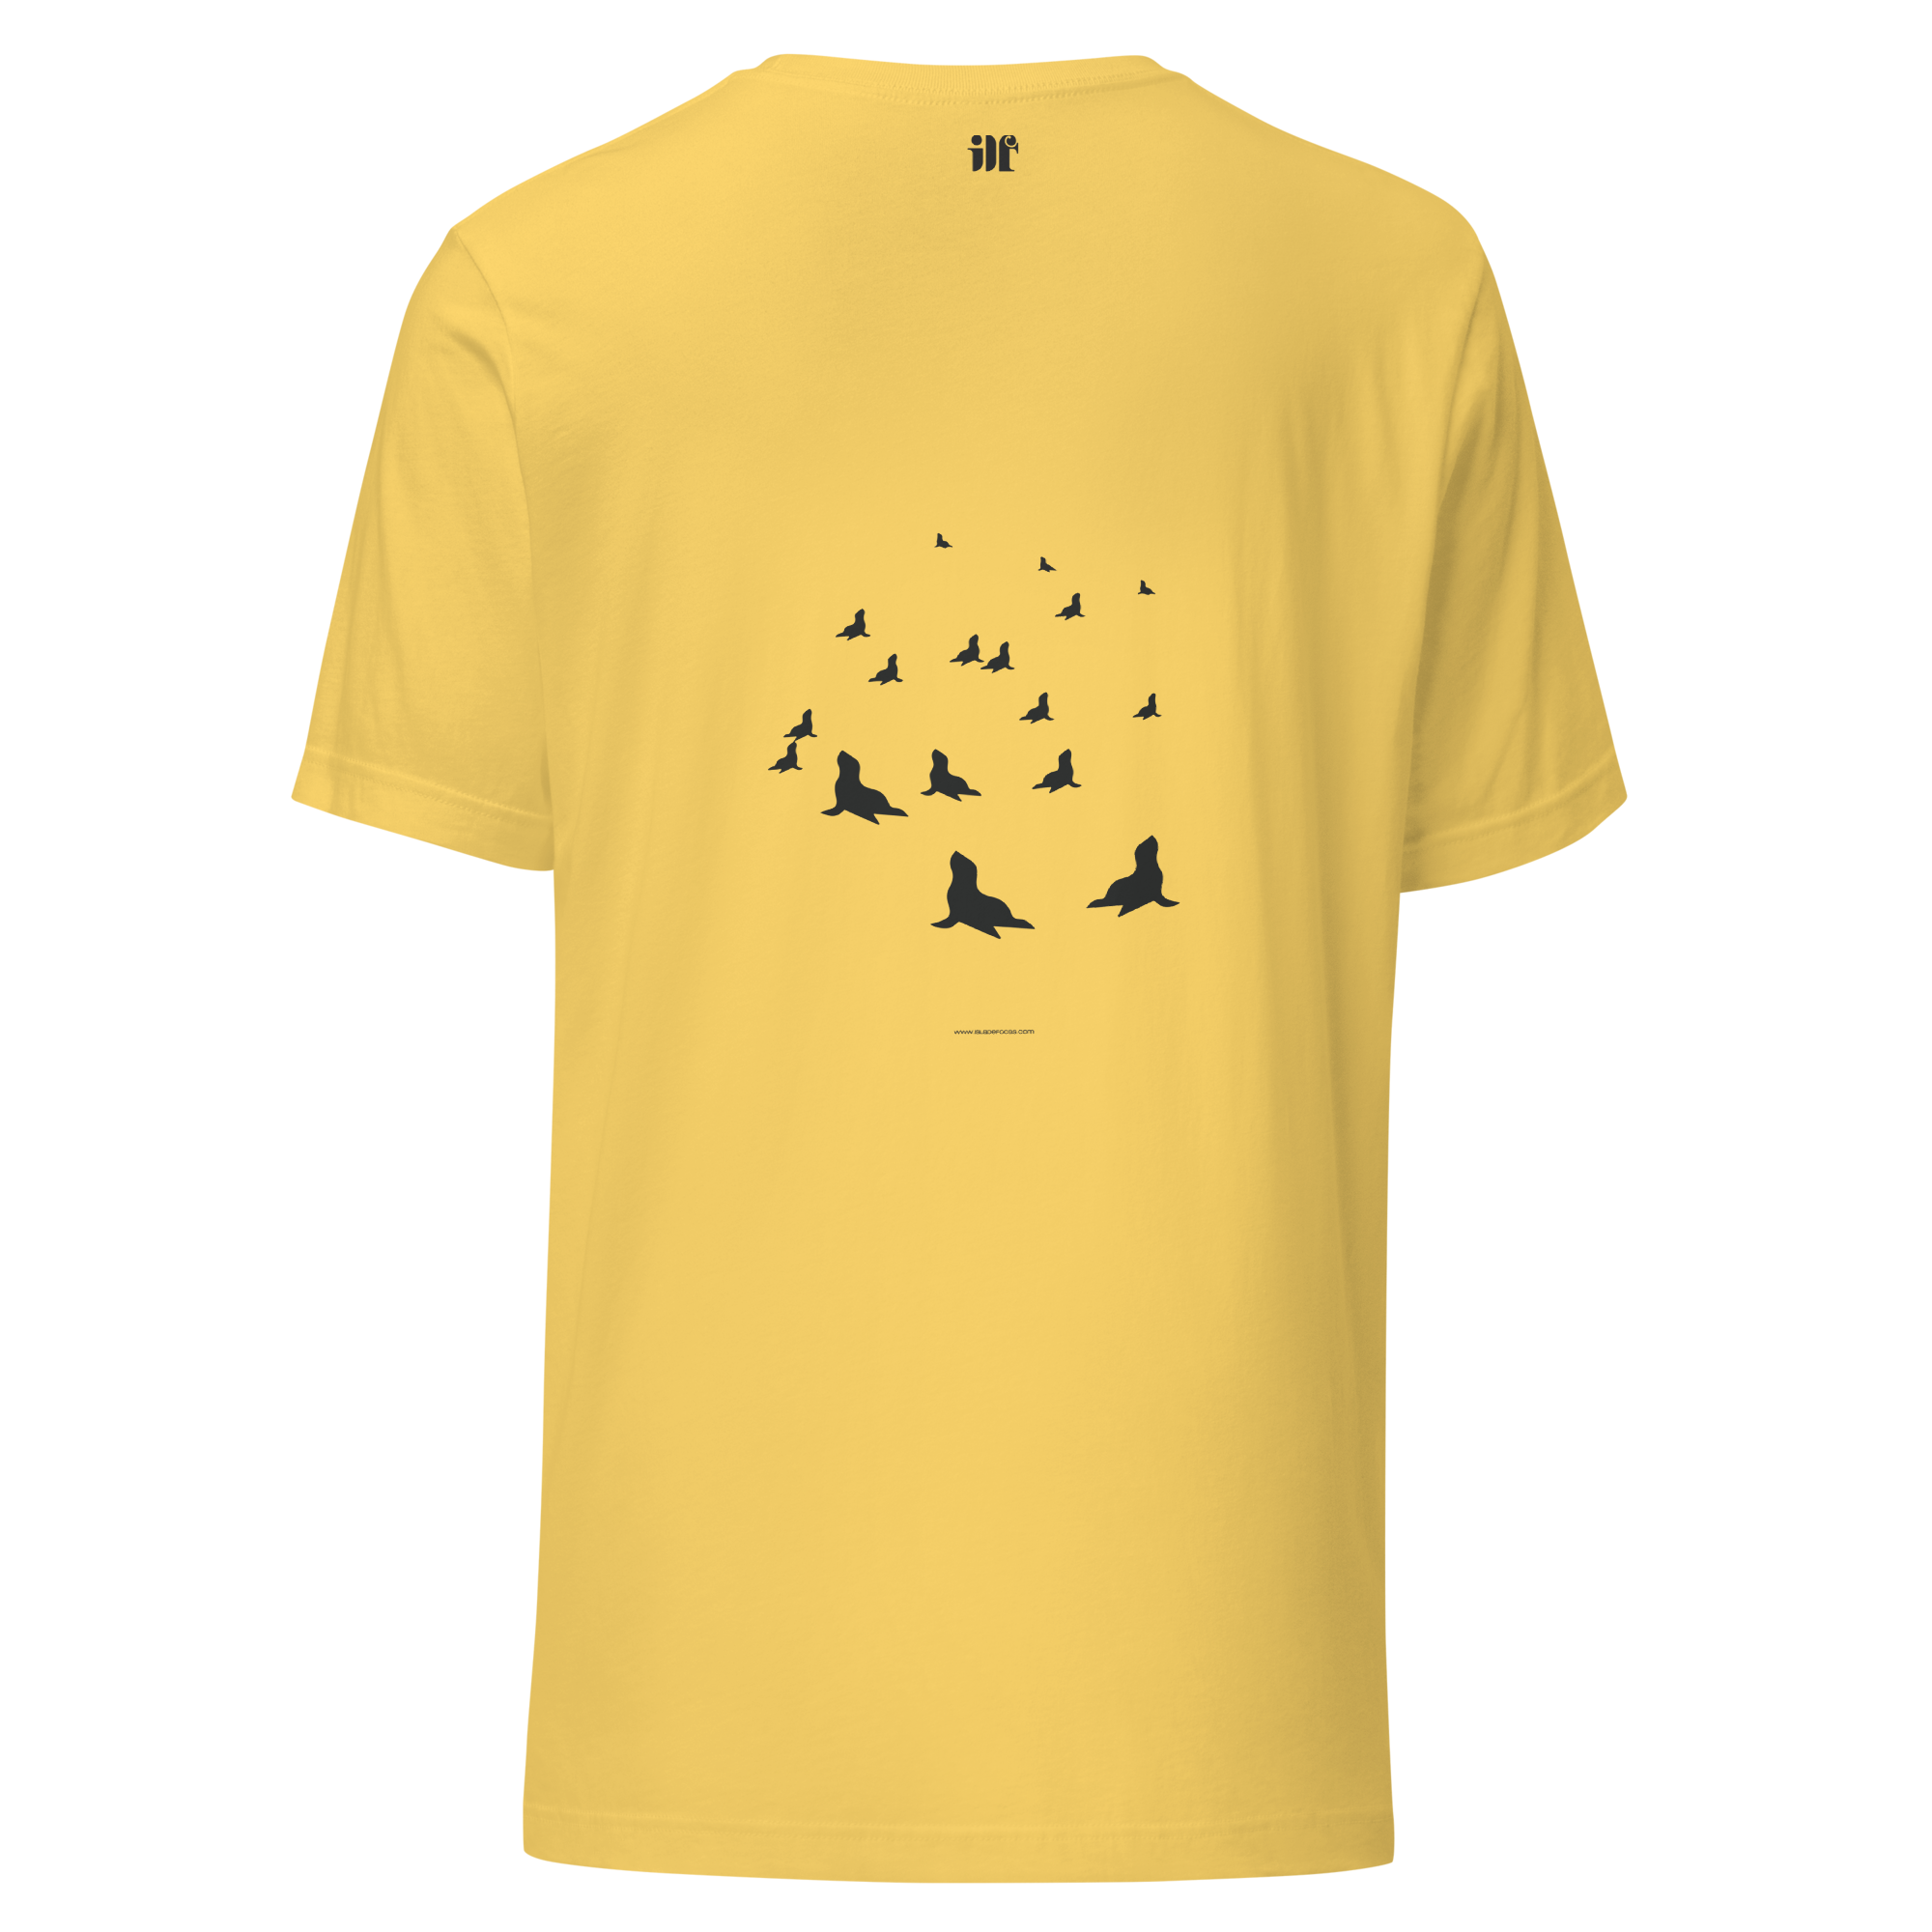 unisex-staple-t-shirt-yellow-back-662a42e27e0ad.png